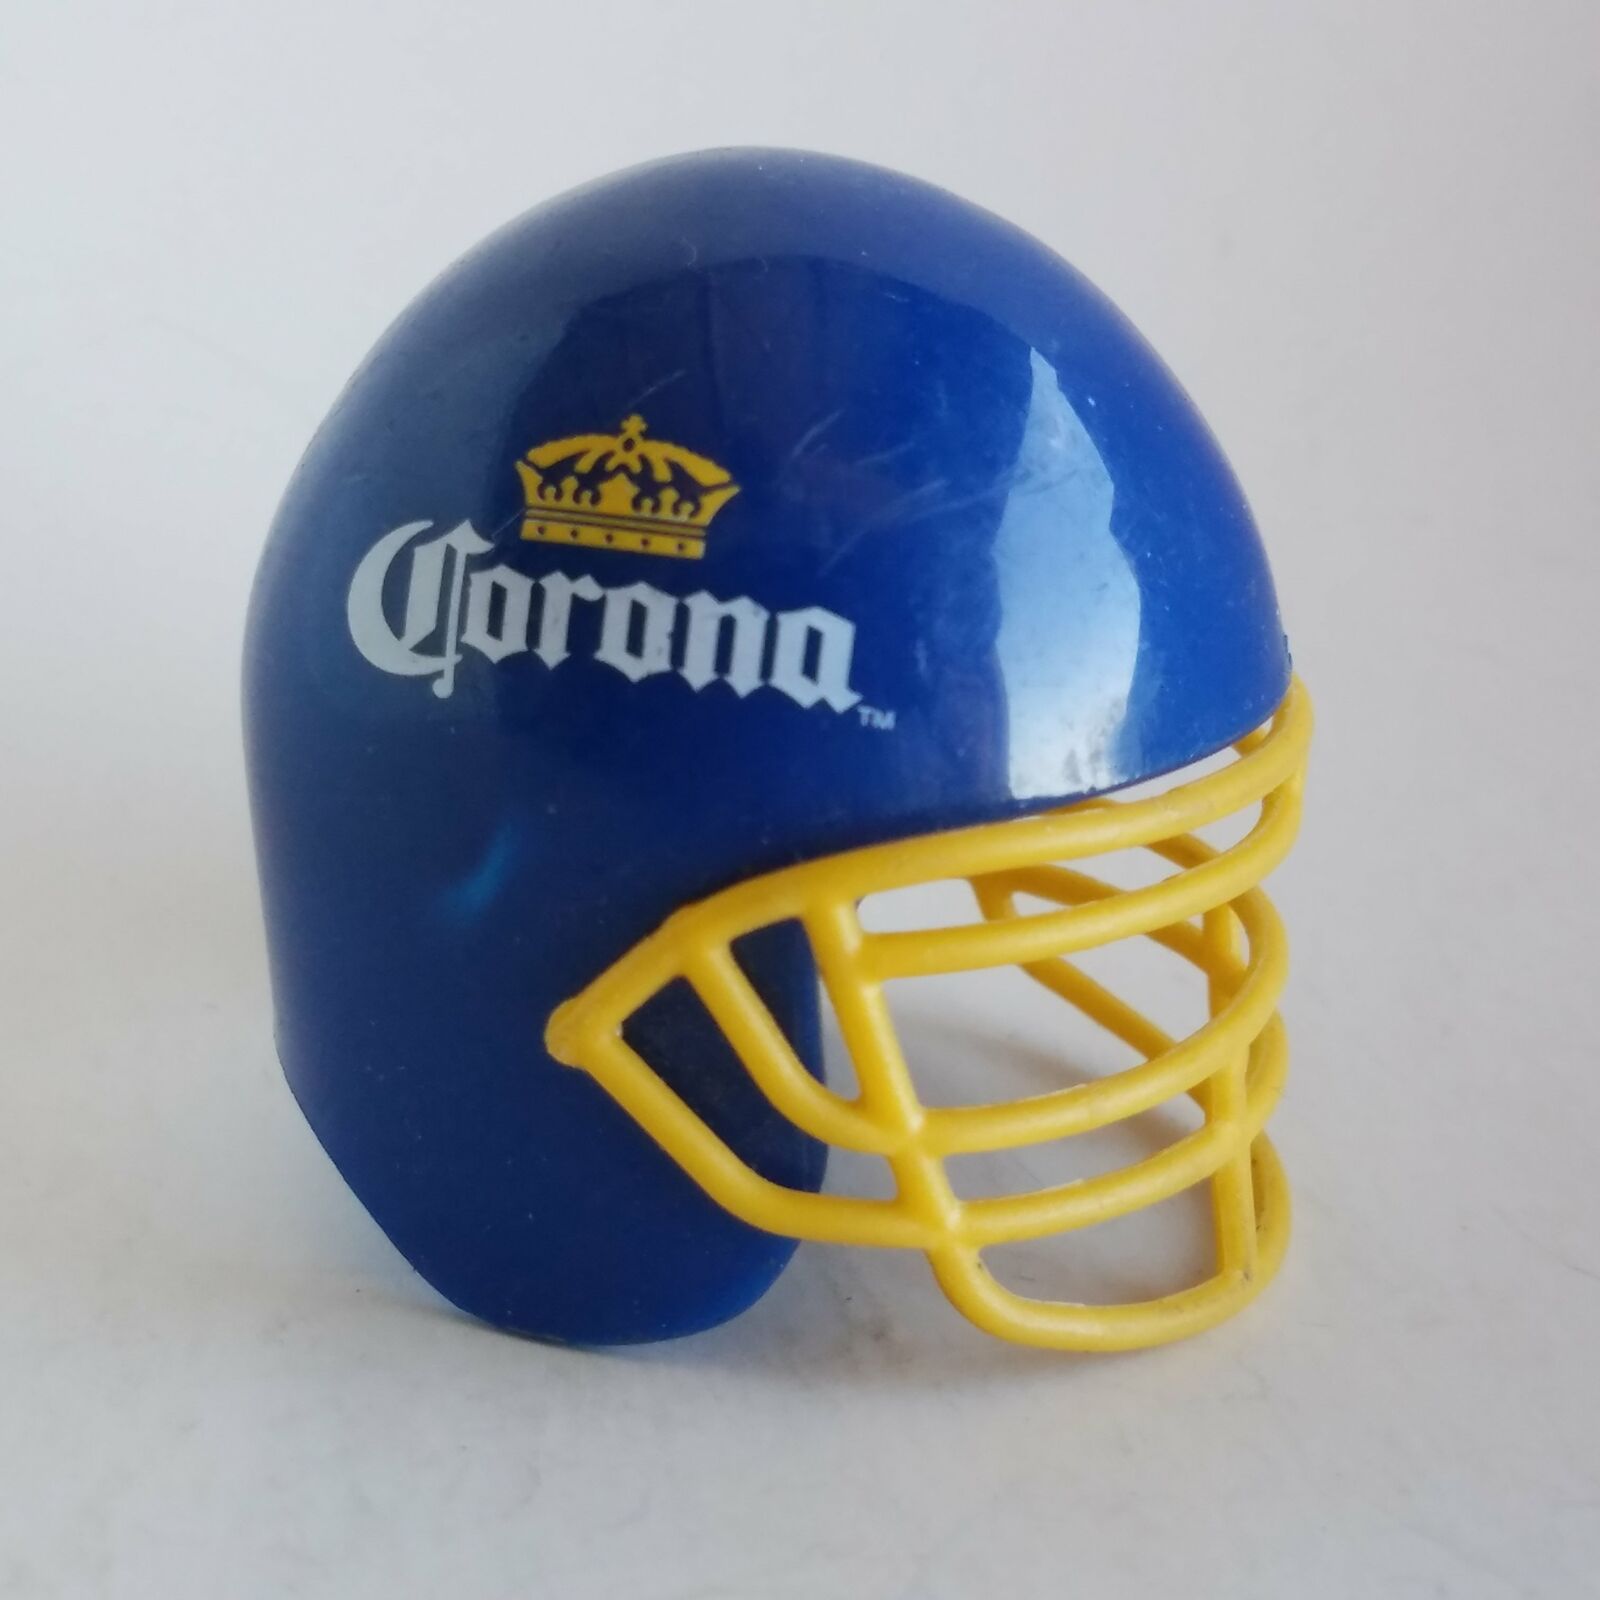 Corona Miniature Football Helmet Bottle Opener